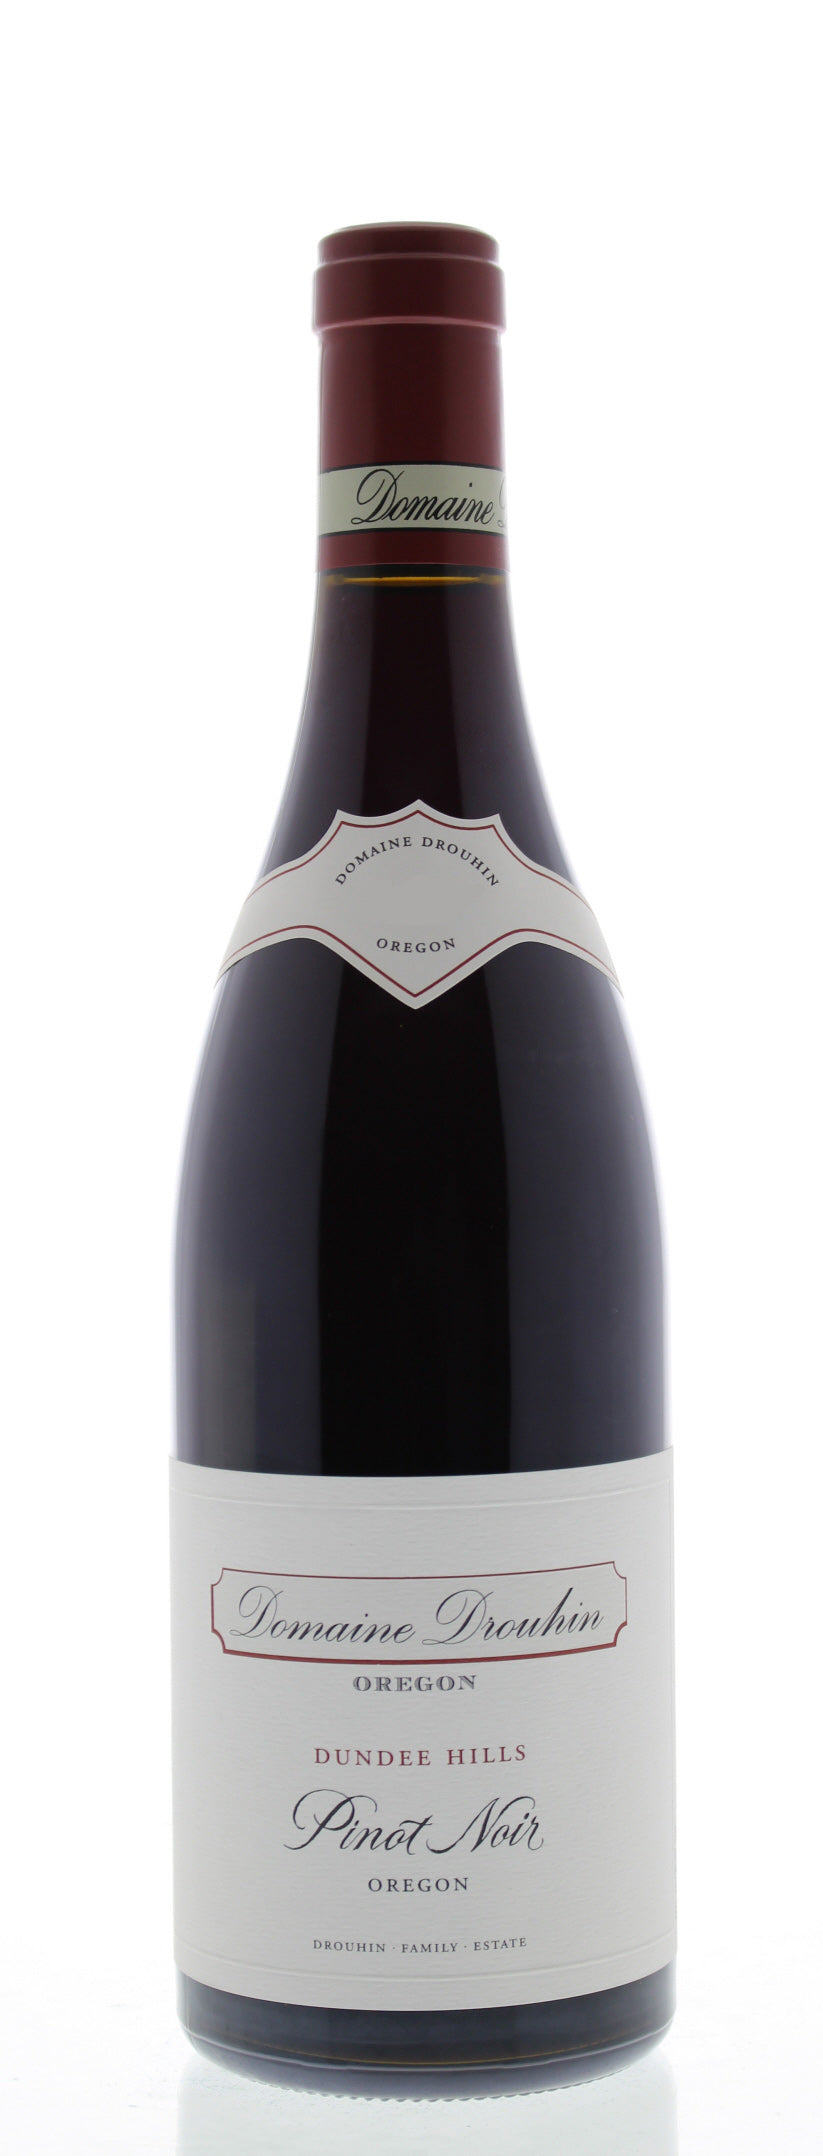 Domaine Drouhin - Oregon Pinot Noir 2016